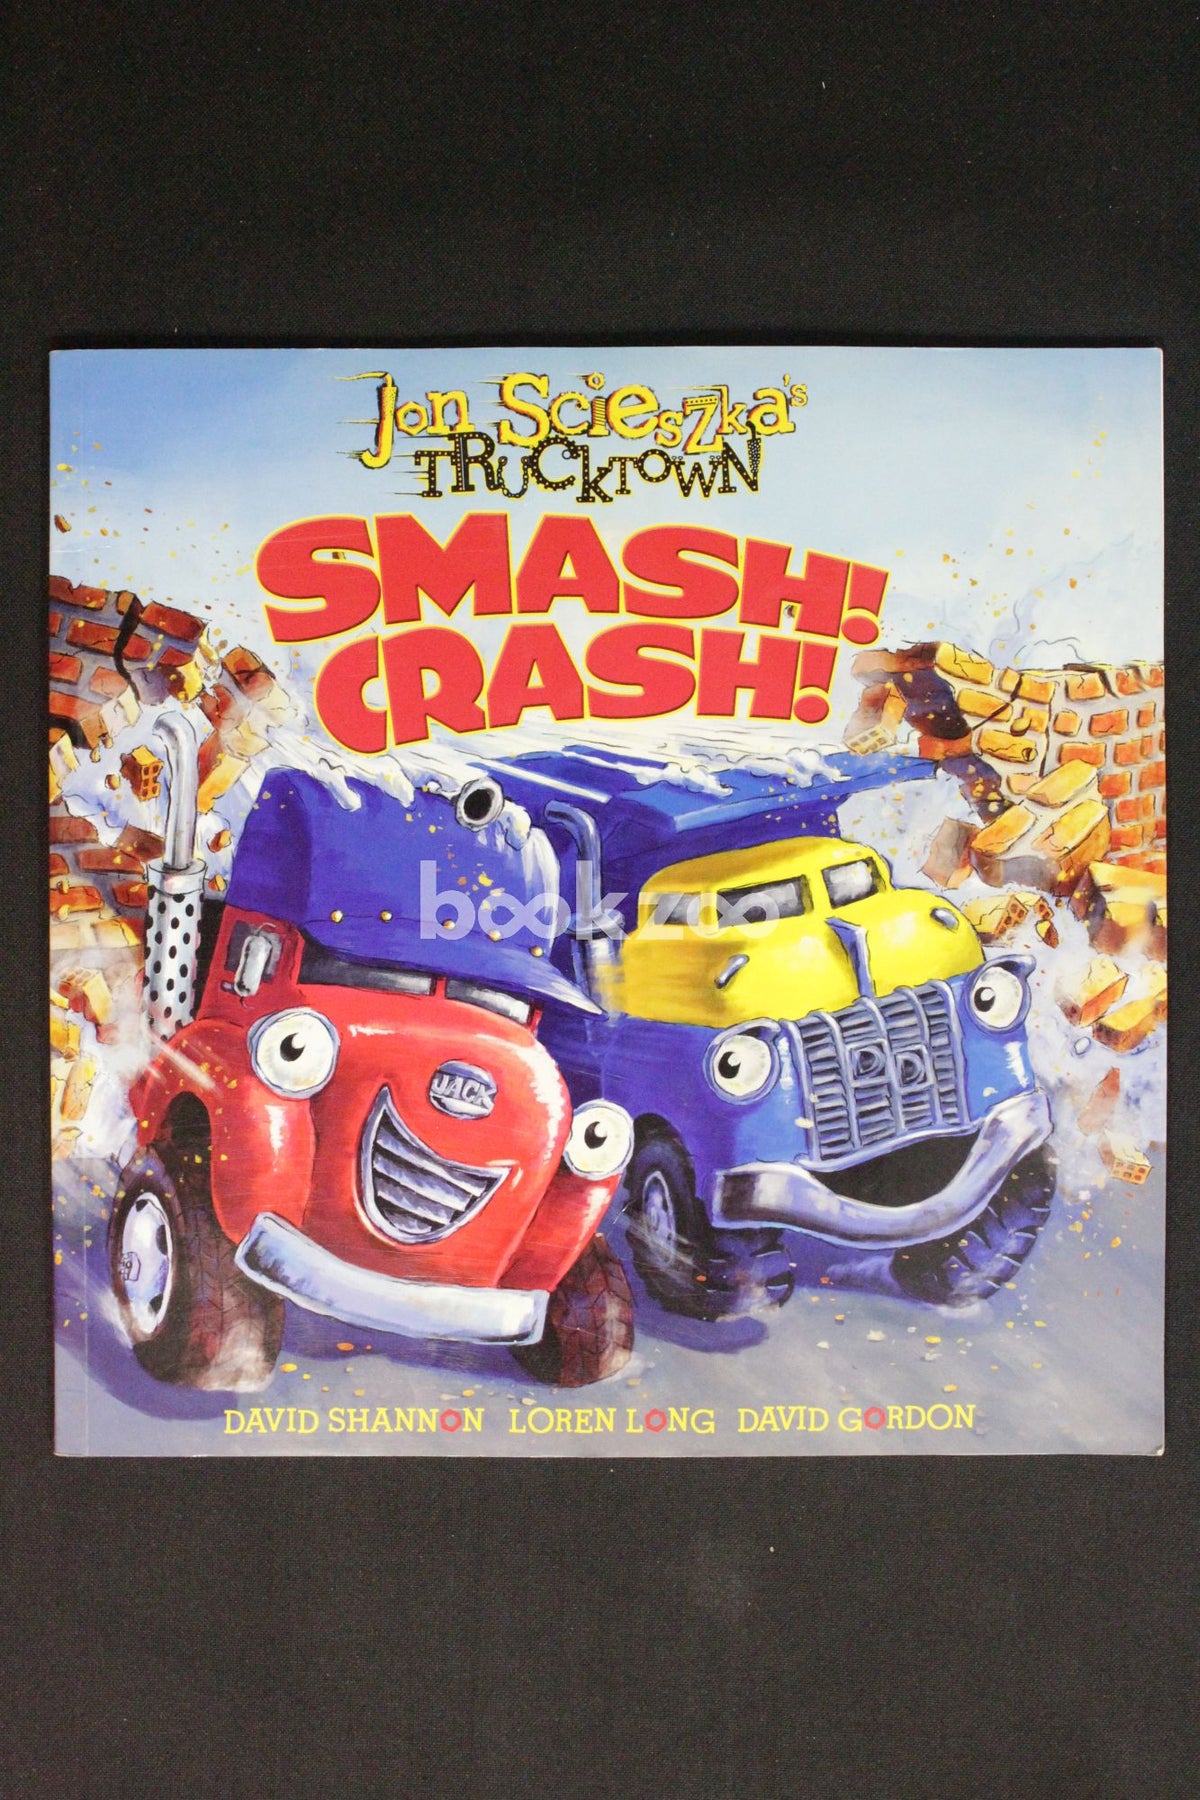 Smash! Crash! book by Jon Scieszka